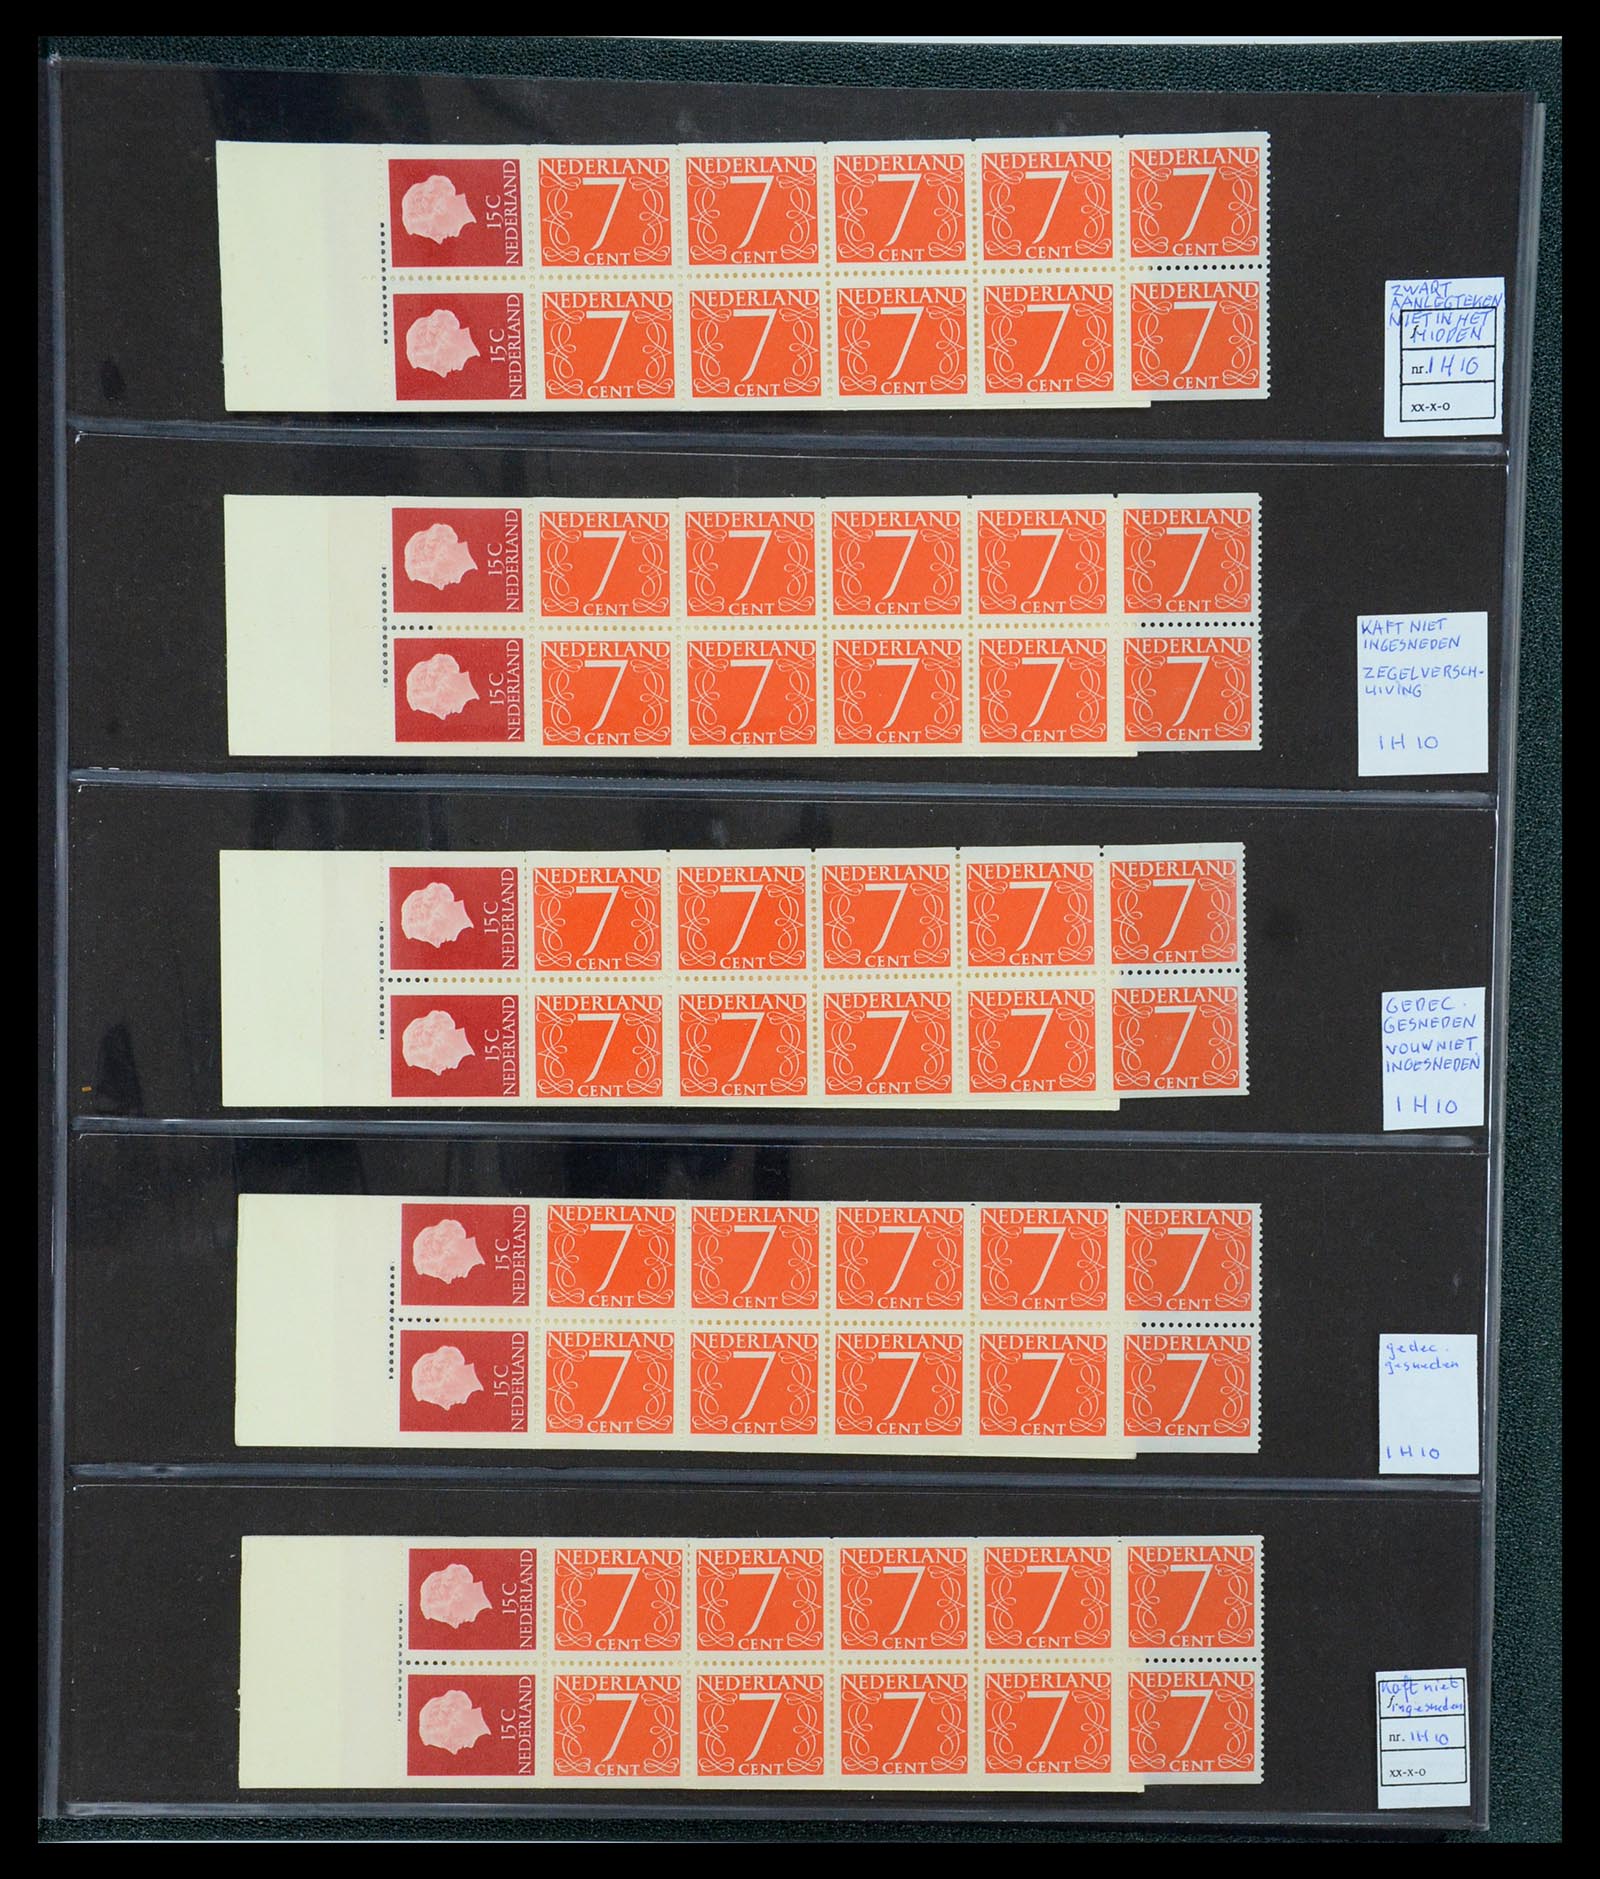 35705 009 - Stamp Collection 35705 Netherlands stamp booklets 1964-2000.